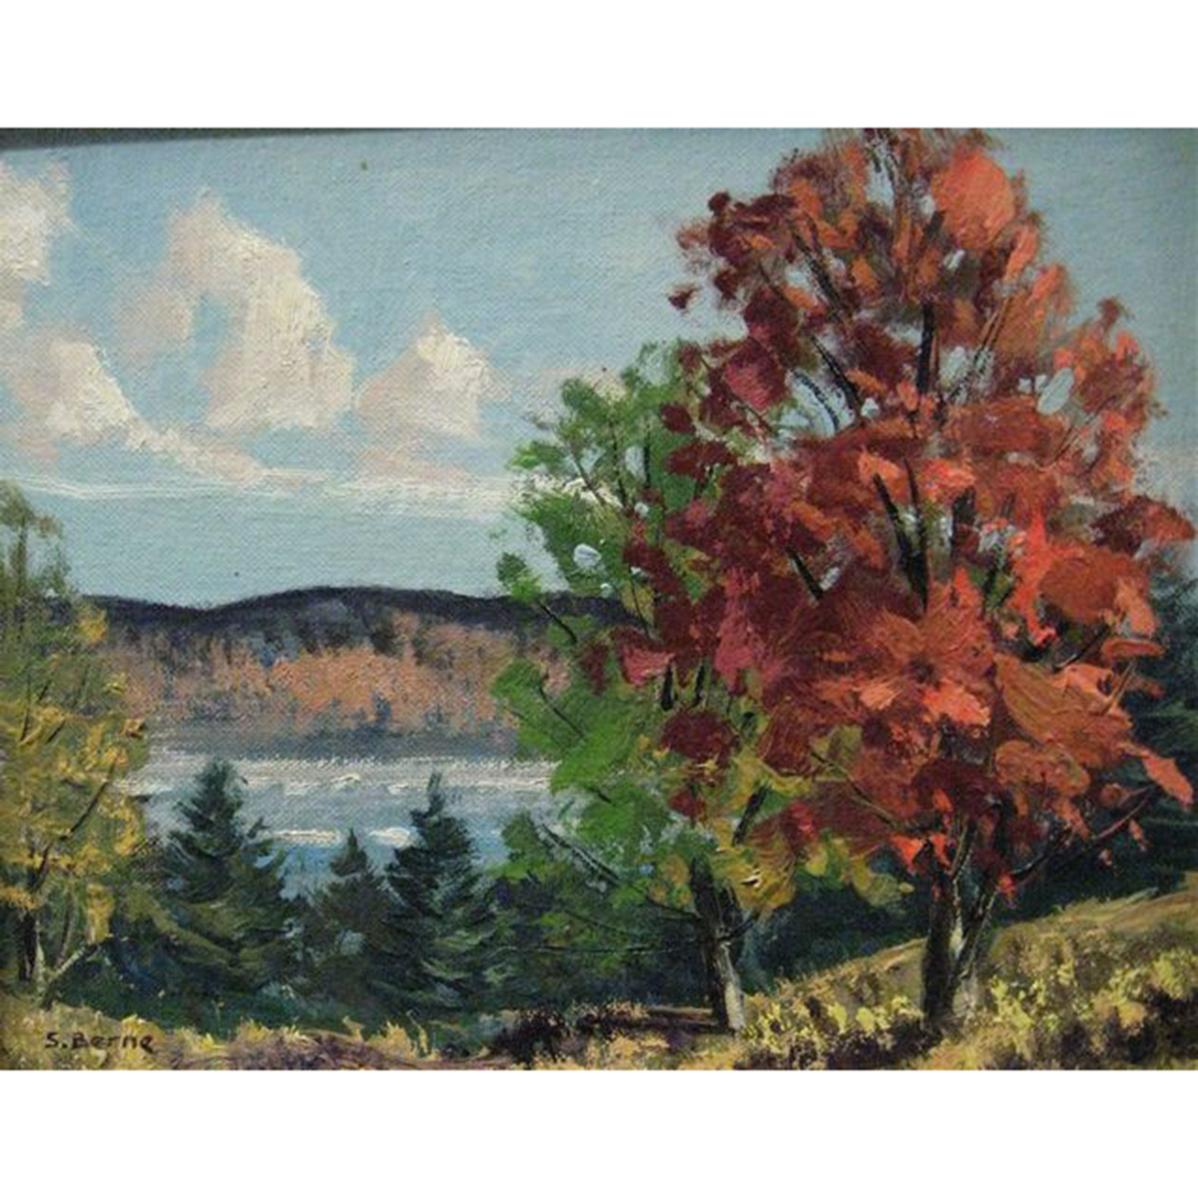 SYDNEY BERNE (CANADIAN, 1921-) 